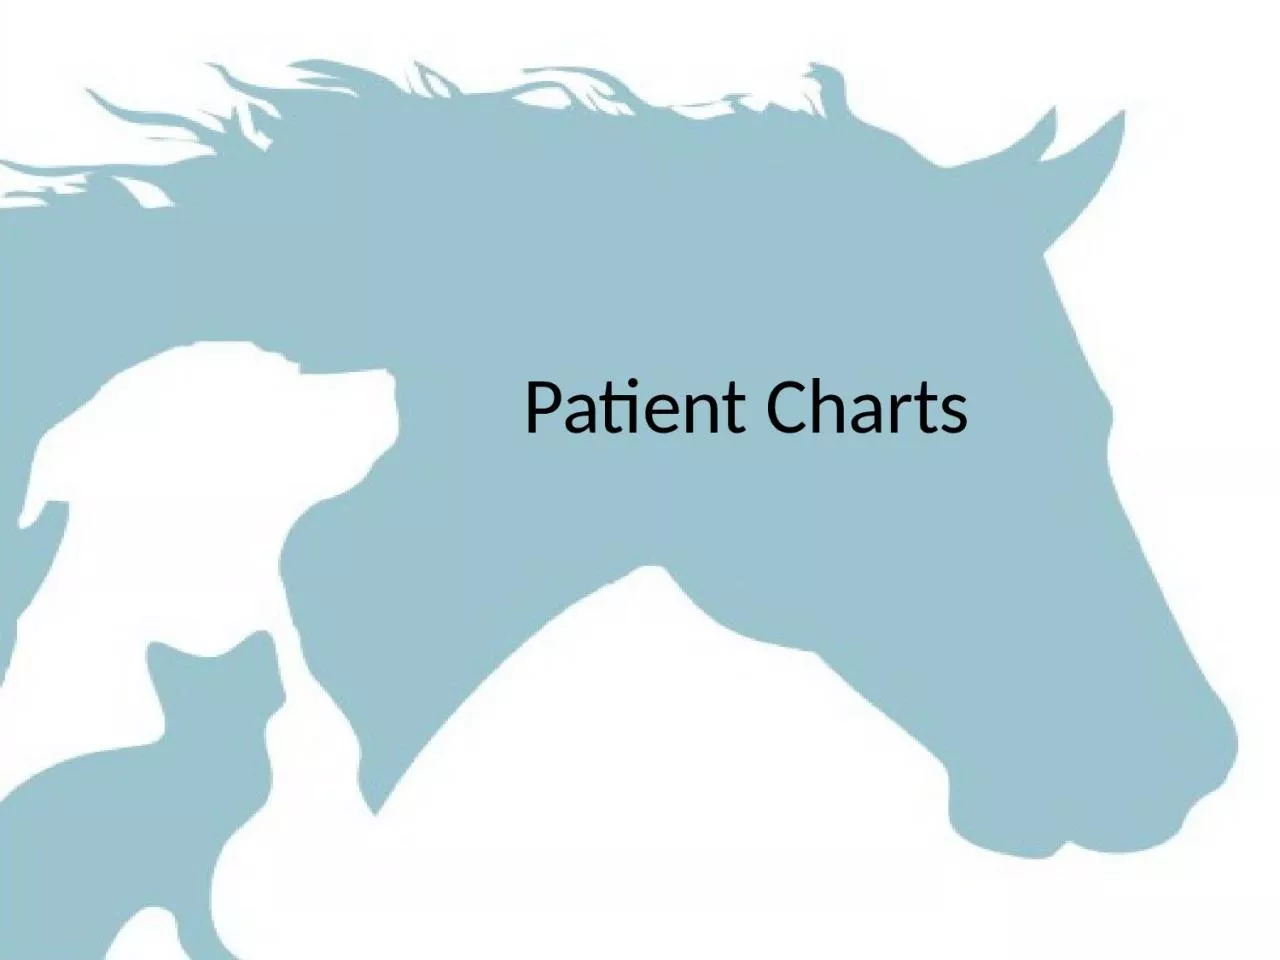 Patient Charts Objective